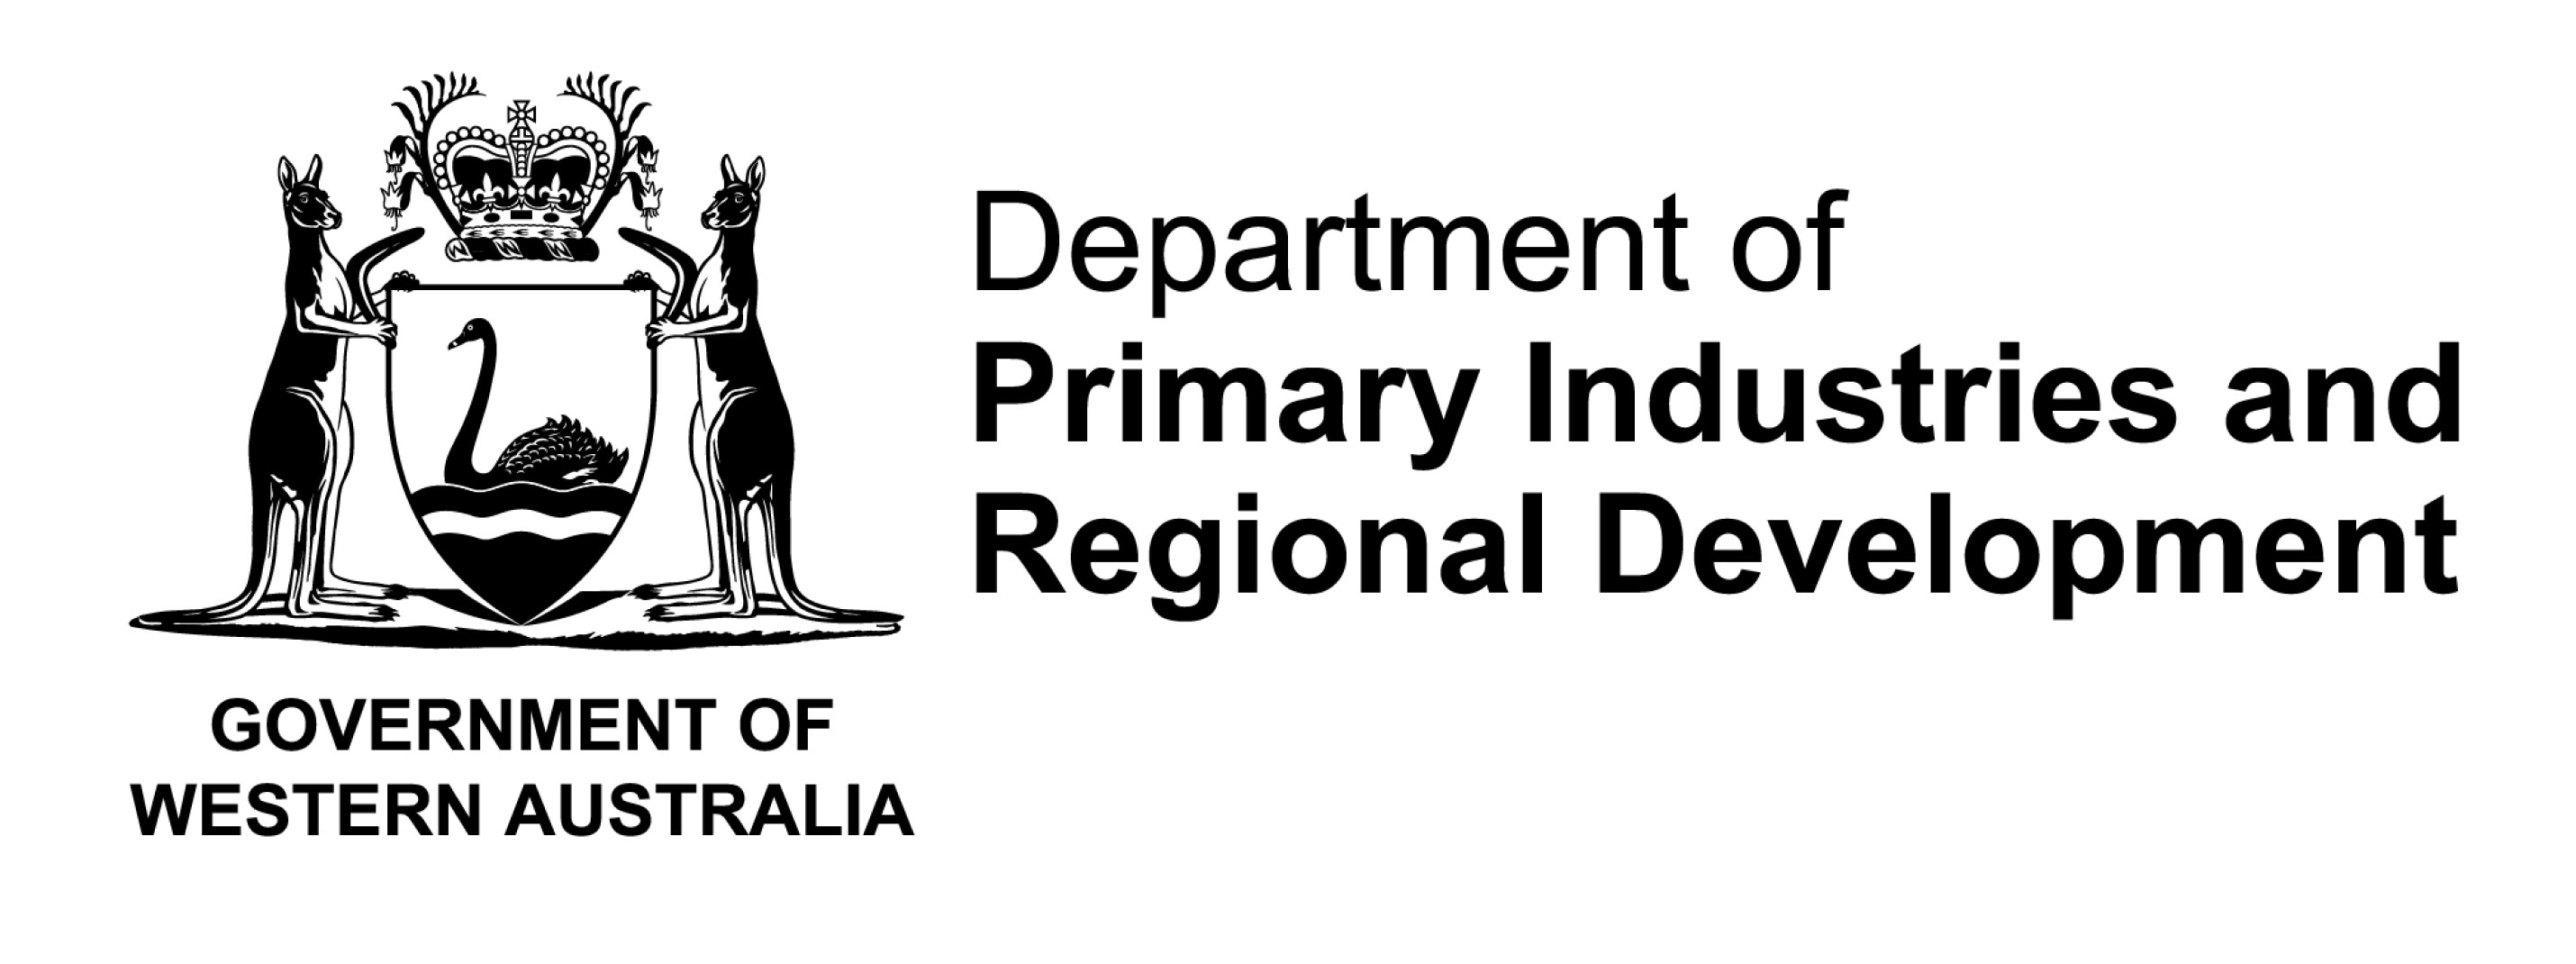 Victoria DPI logo